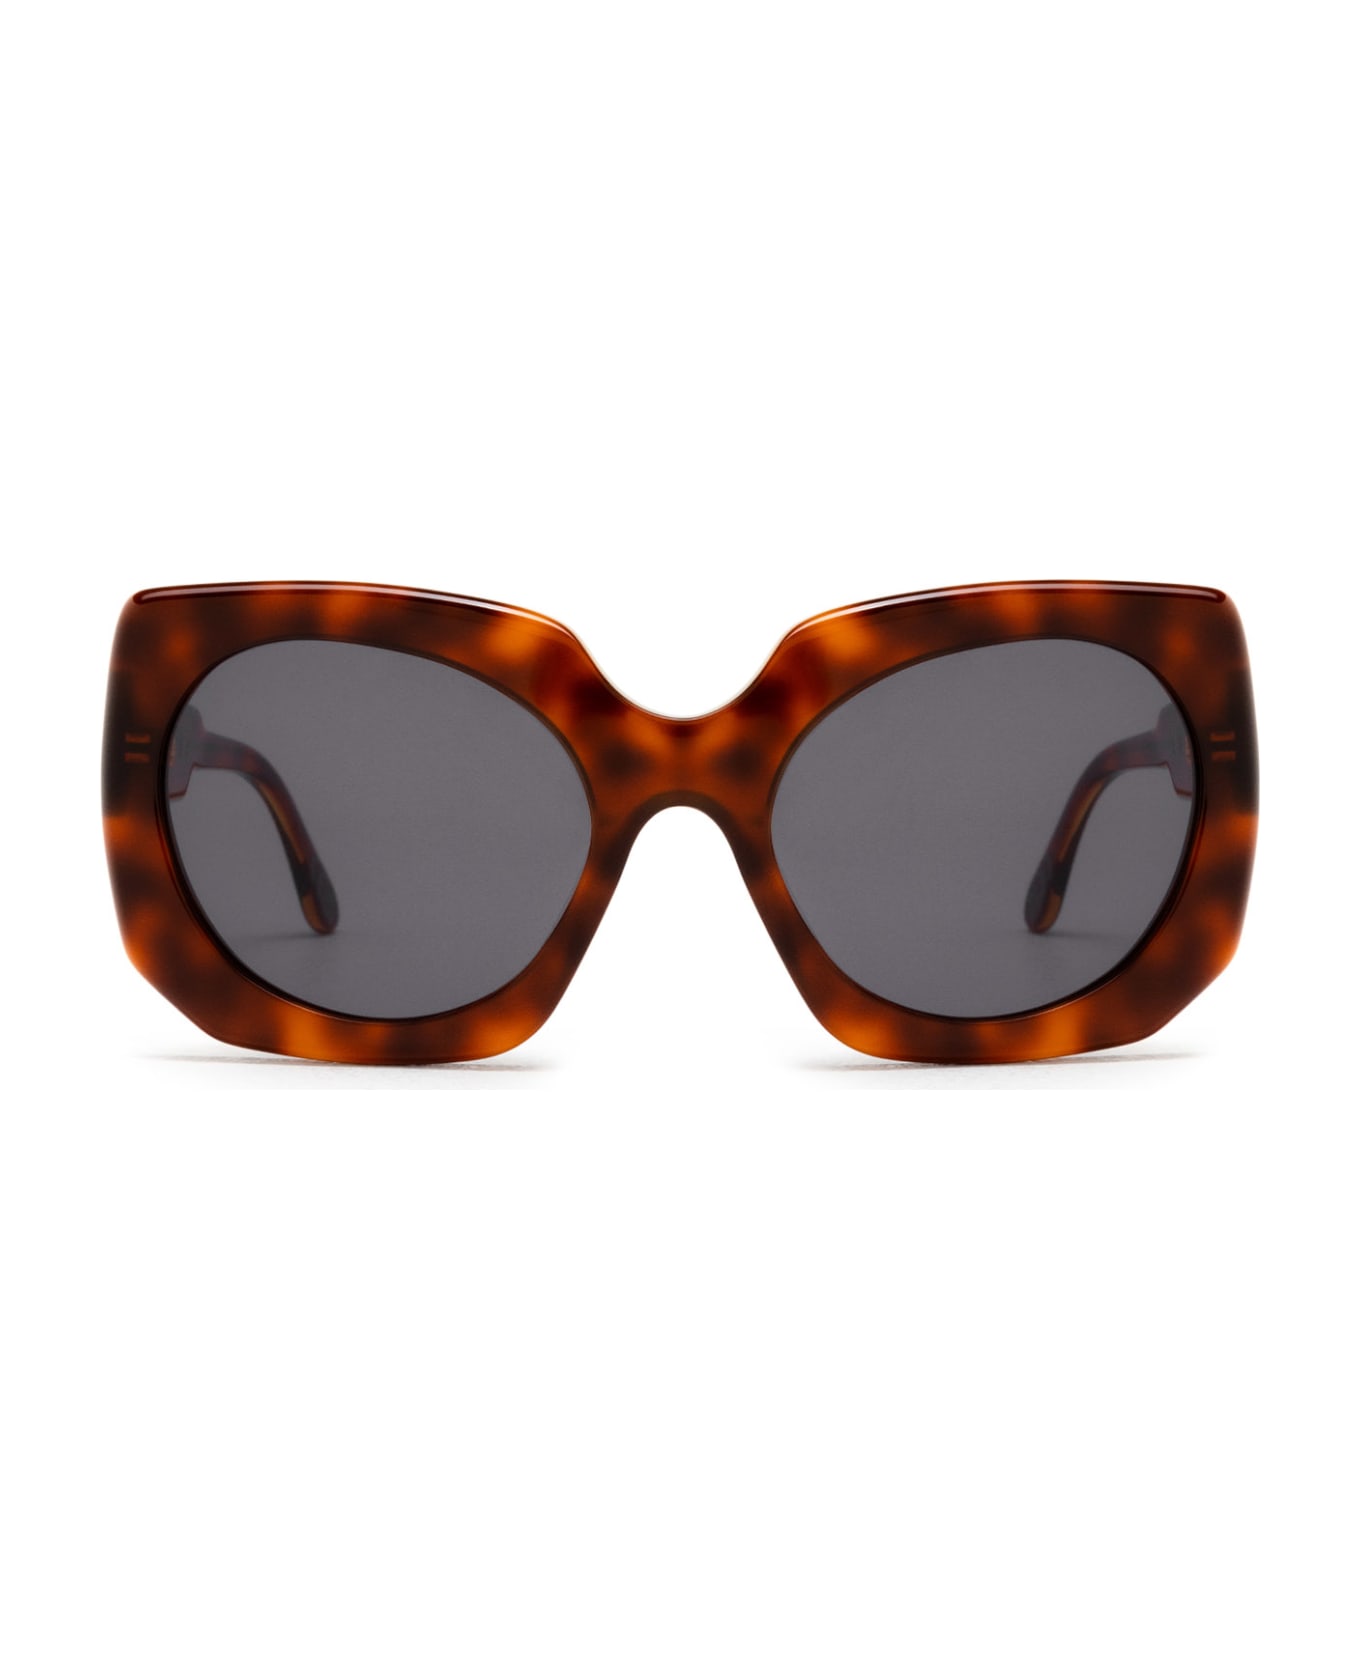 Marni Eyewear Jellyfish Lake Blonde Havana Sunglasses - Blonde Havana